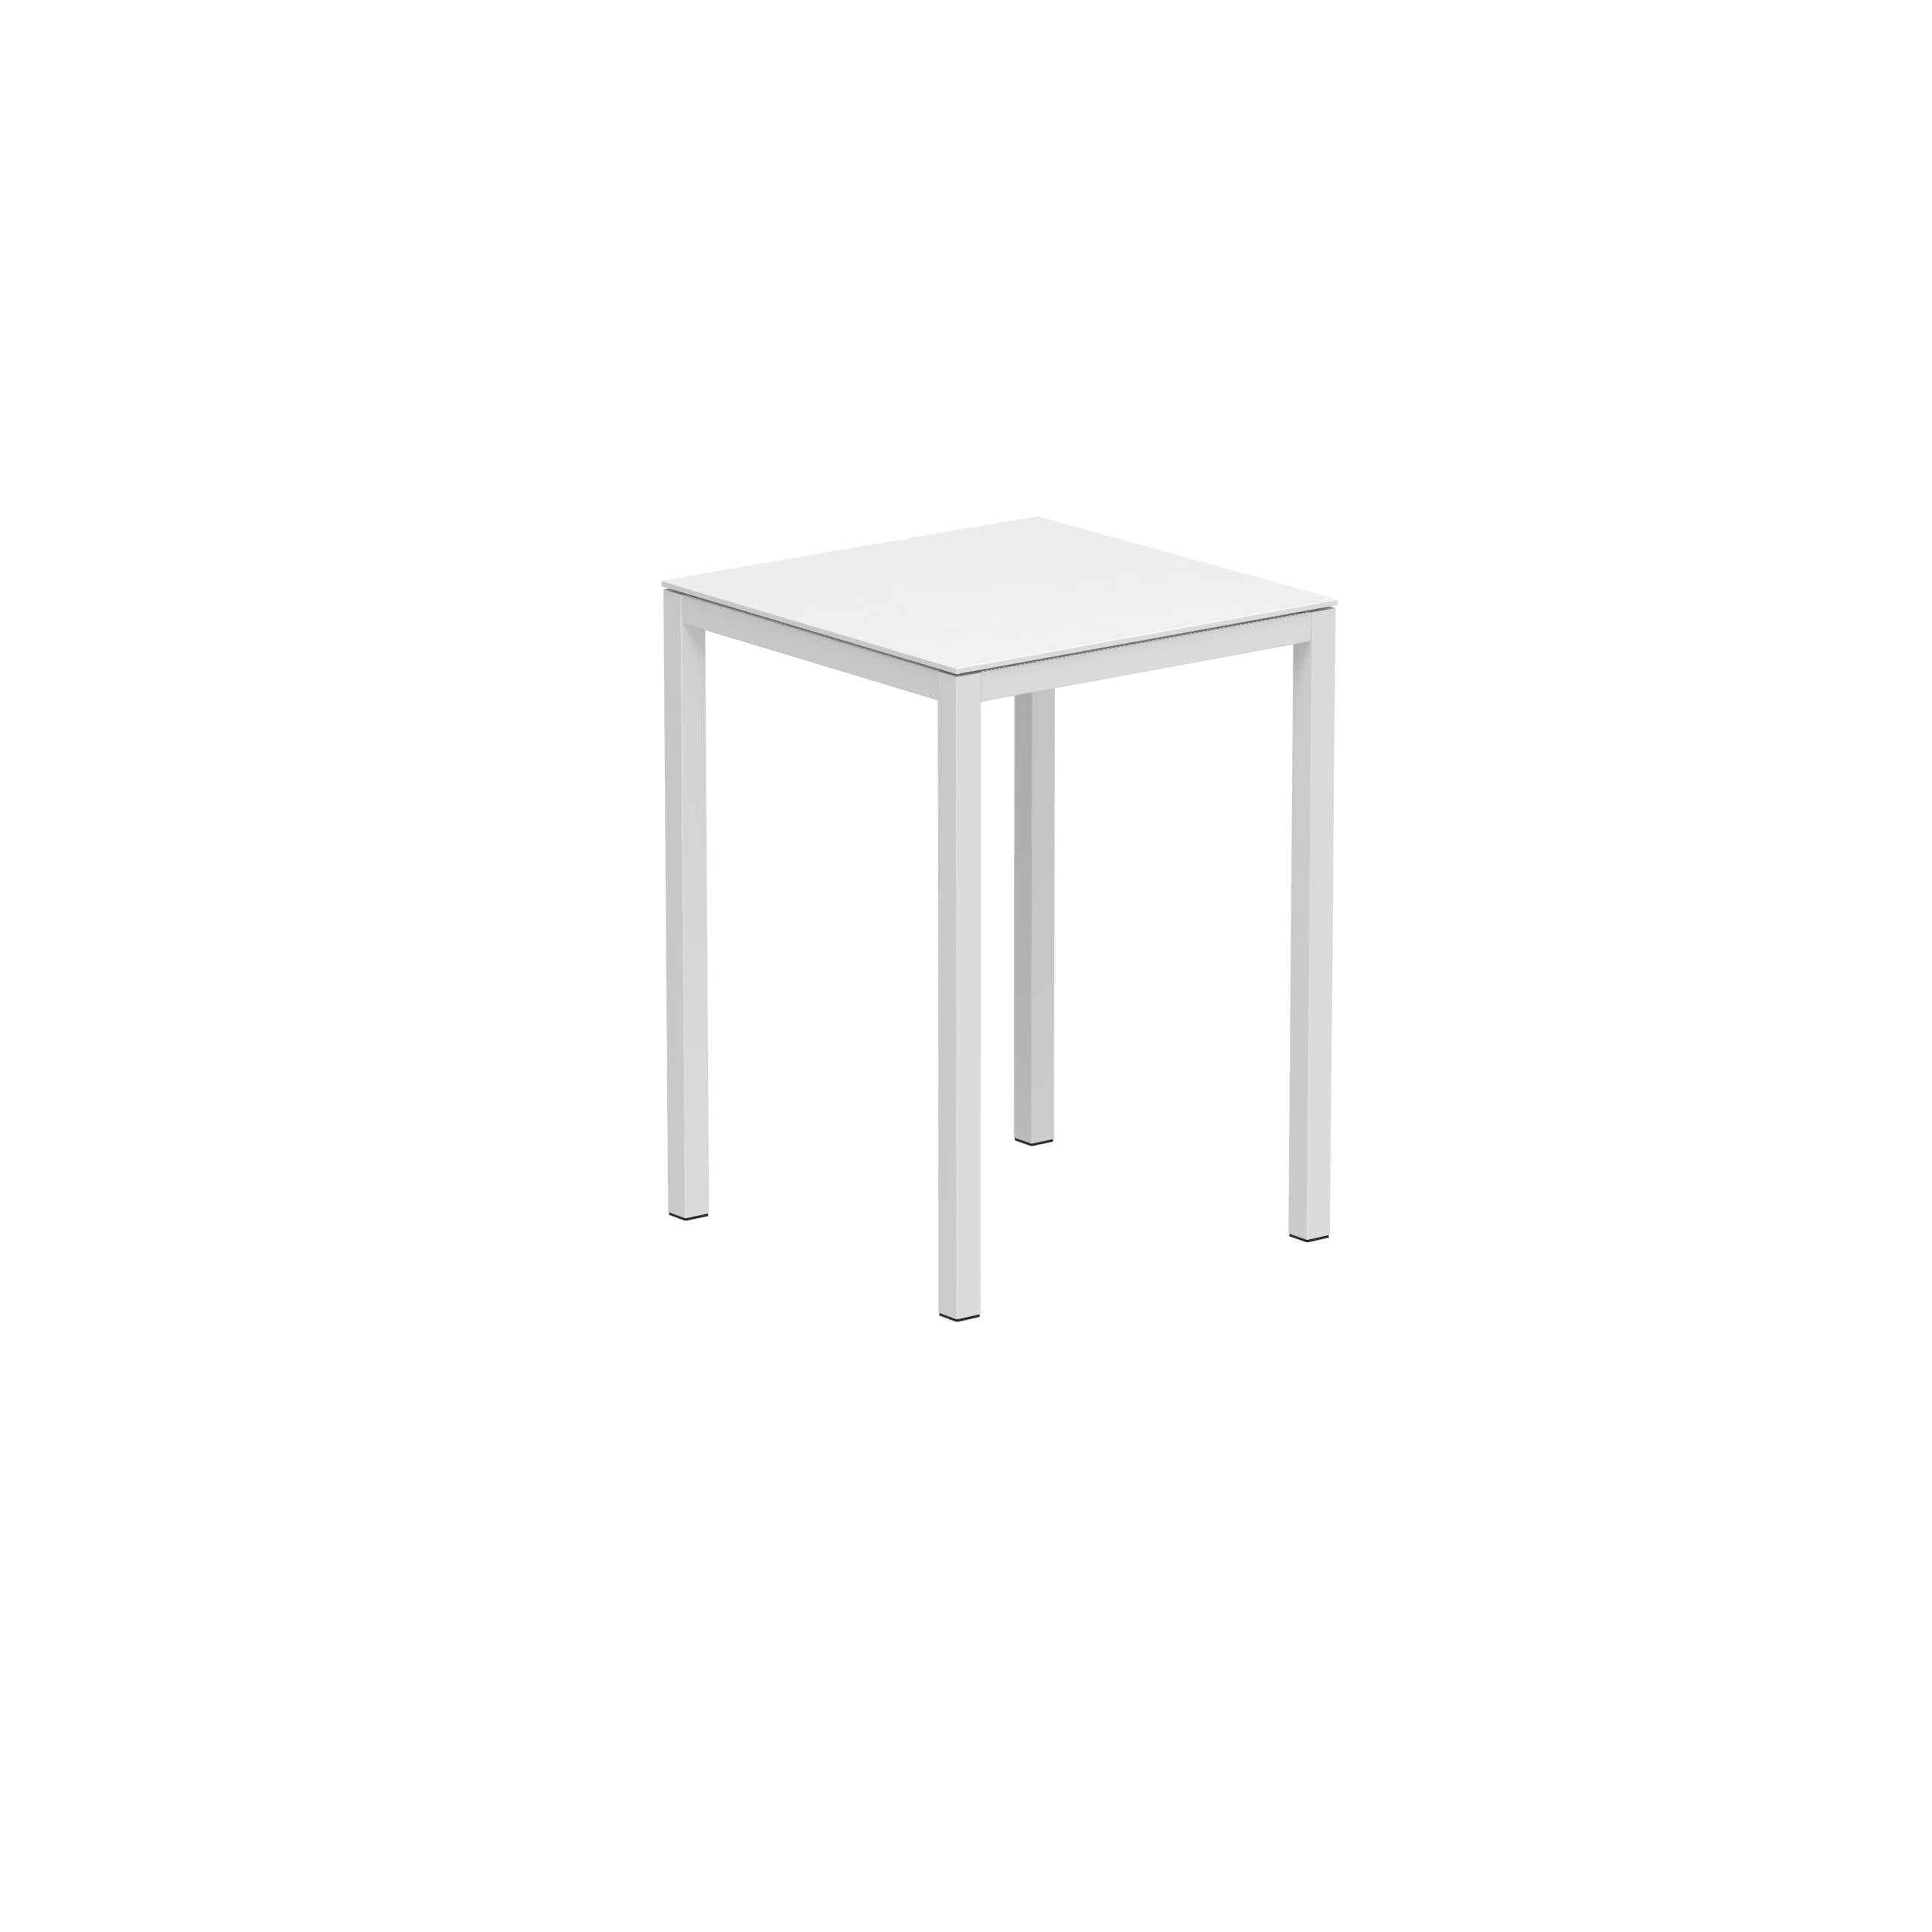 Taboela High Table 80x80cm White + Ceramic Top White